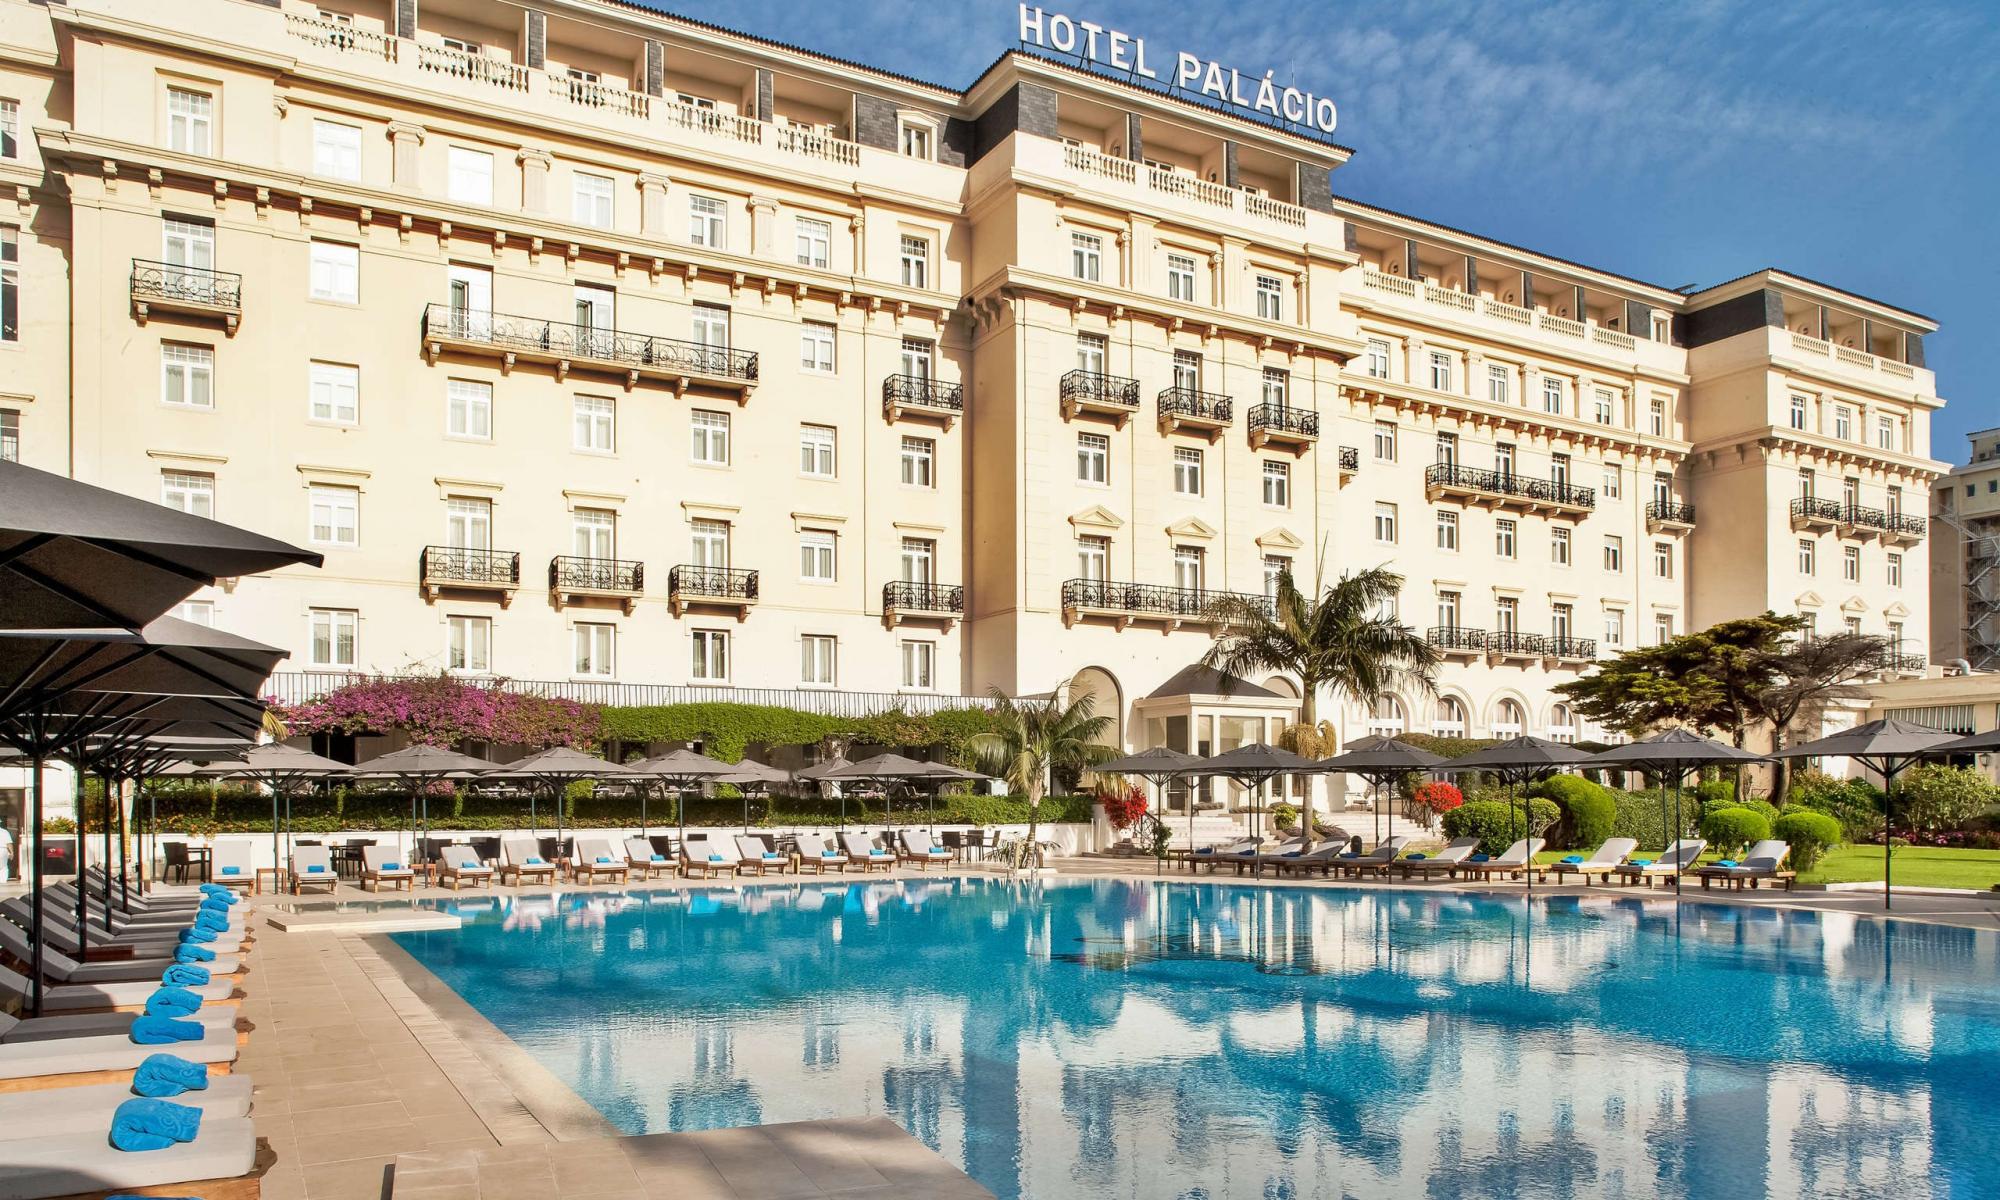 View Palacio Estoril Hotel's lovely main pool in astounding Lisbon.